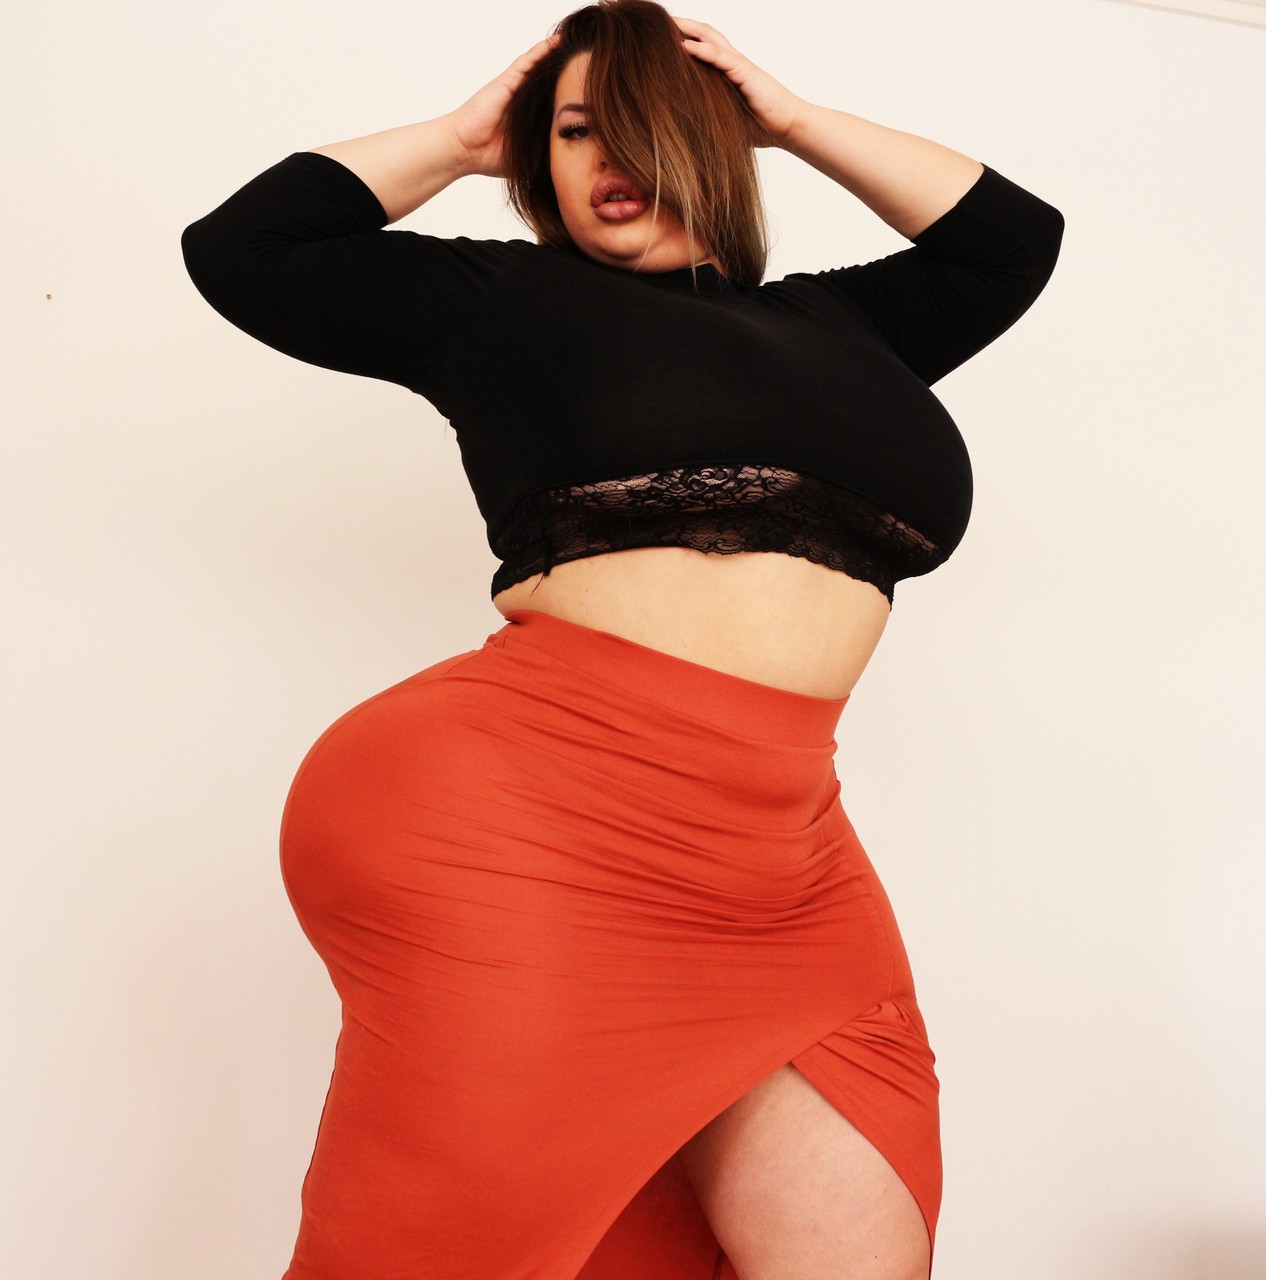 Stunning MILF fatty Natasha Crown flaunting her very big ass in a tight skirt порно фото #423816664 | Natasha Crown Pics, Natasha Crown, BBW, мобильное порно